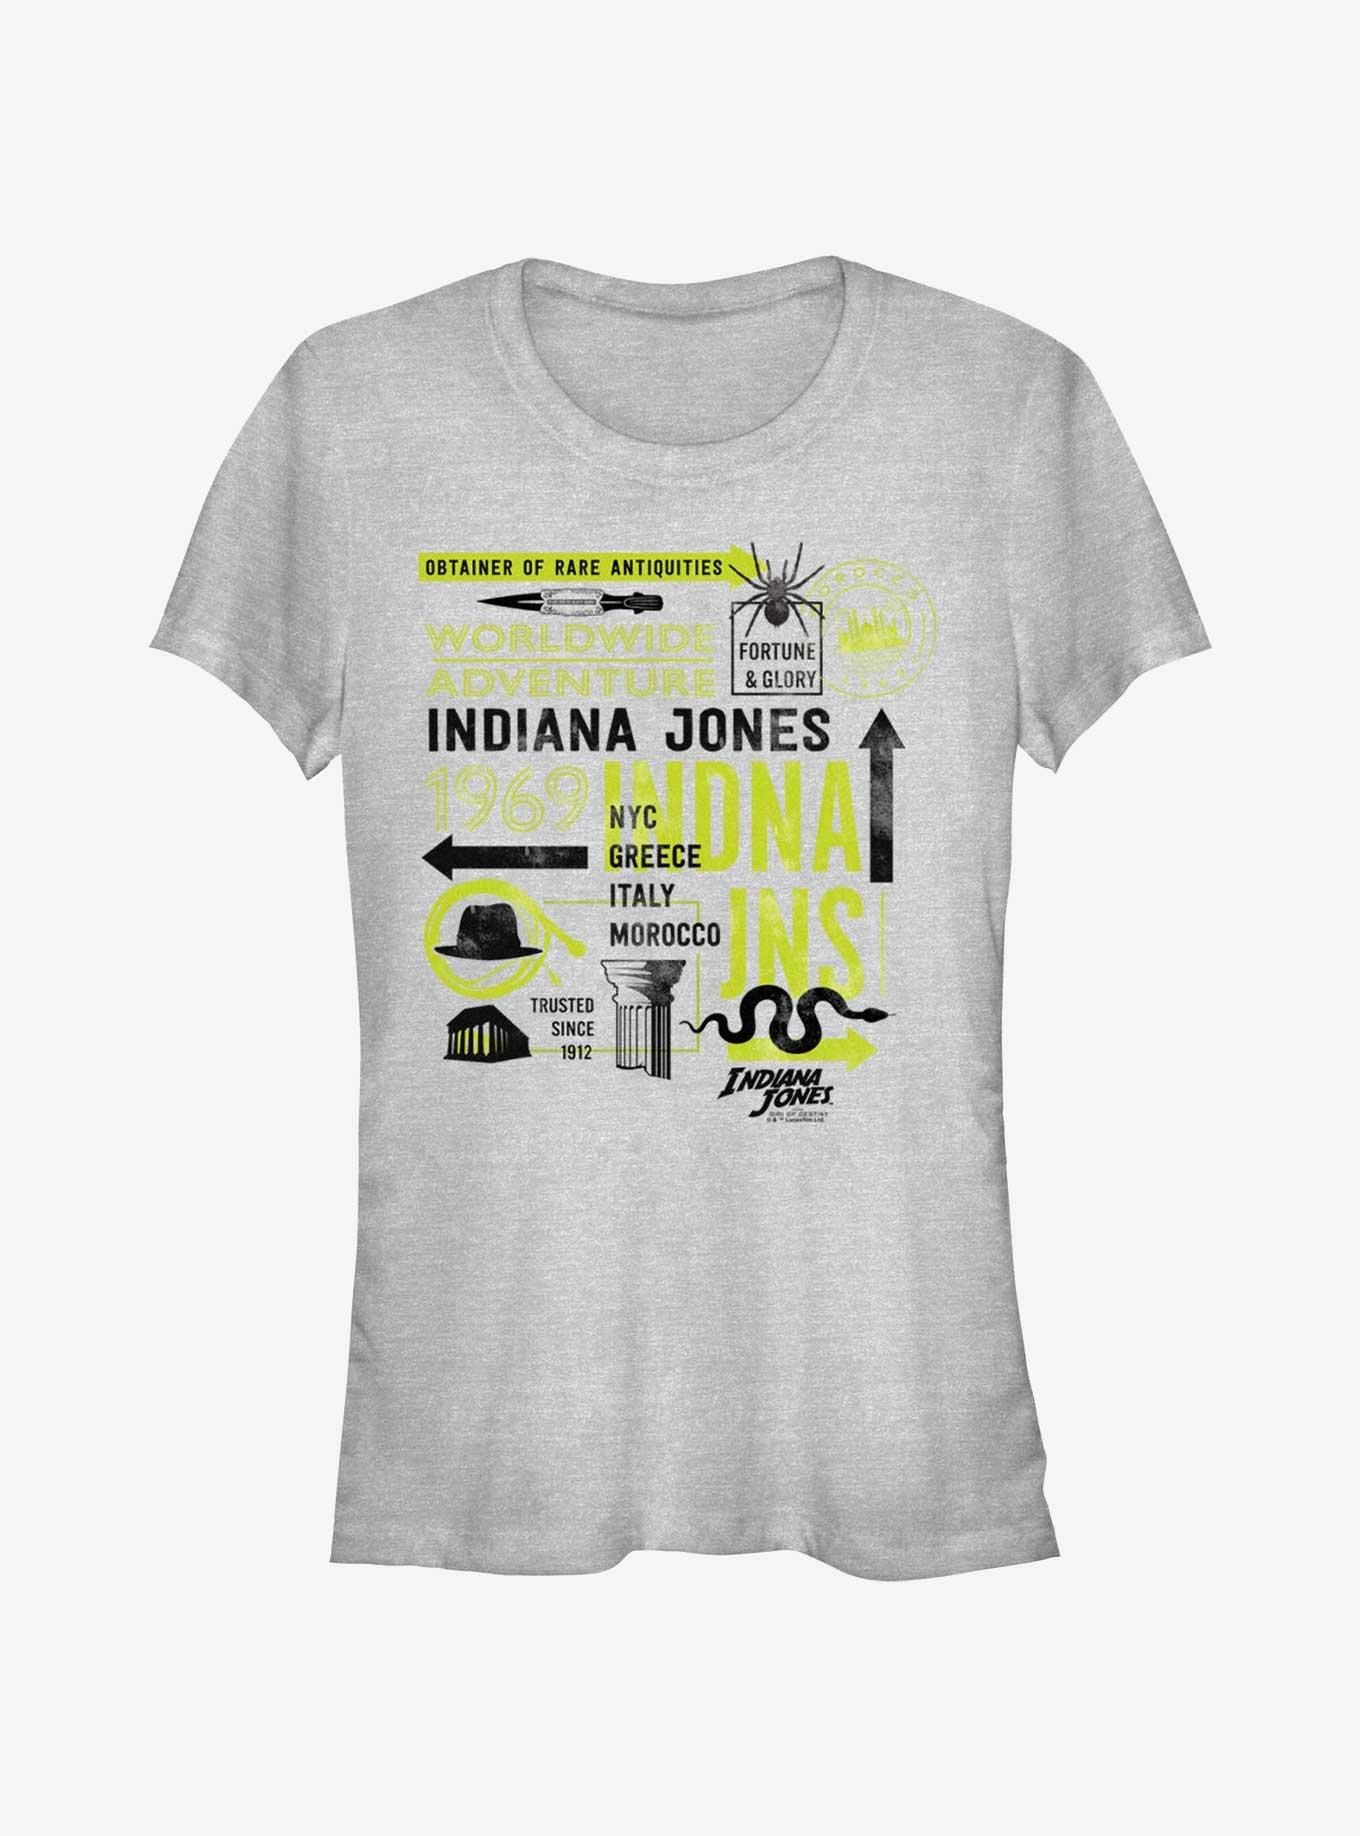 Indiana Jones and the Dial of Destiny Passport Infographic Girls T-Shirt